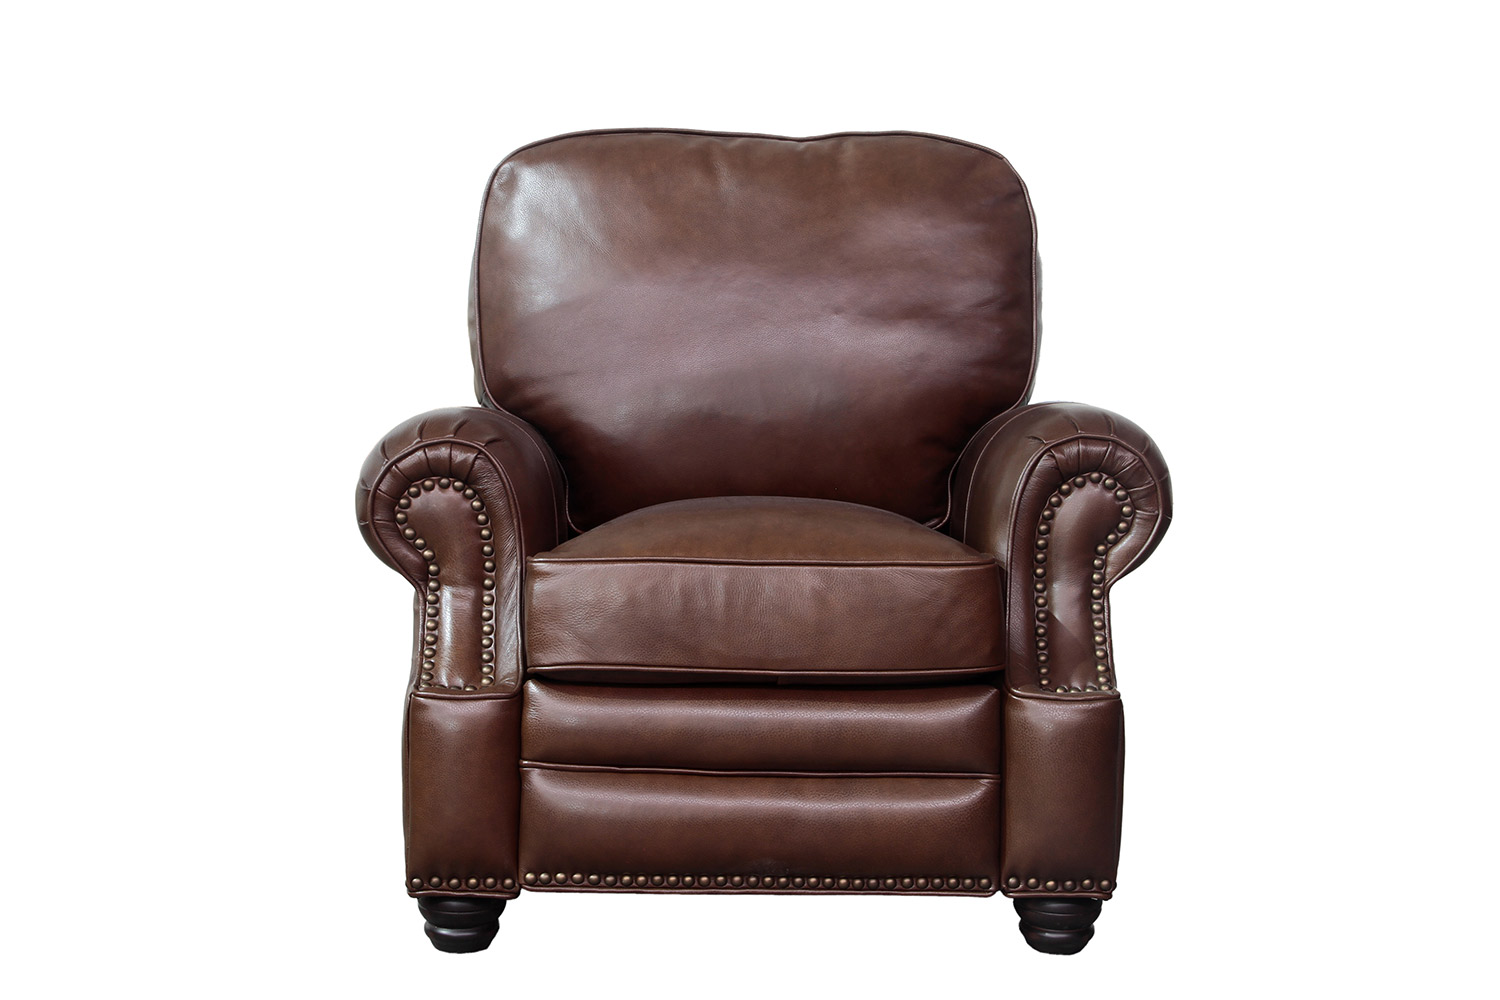 Barcalounger Longhorn Recliner Chair - Shoreham Chocolate/All Leather